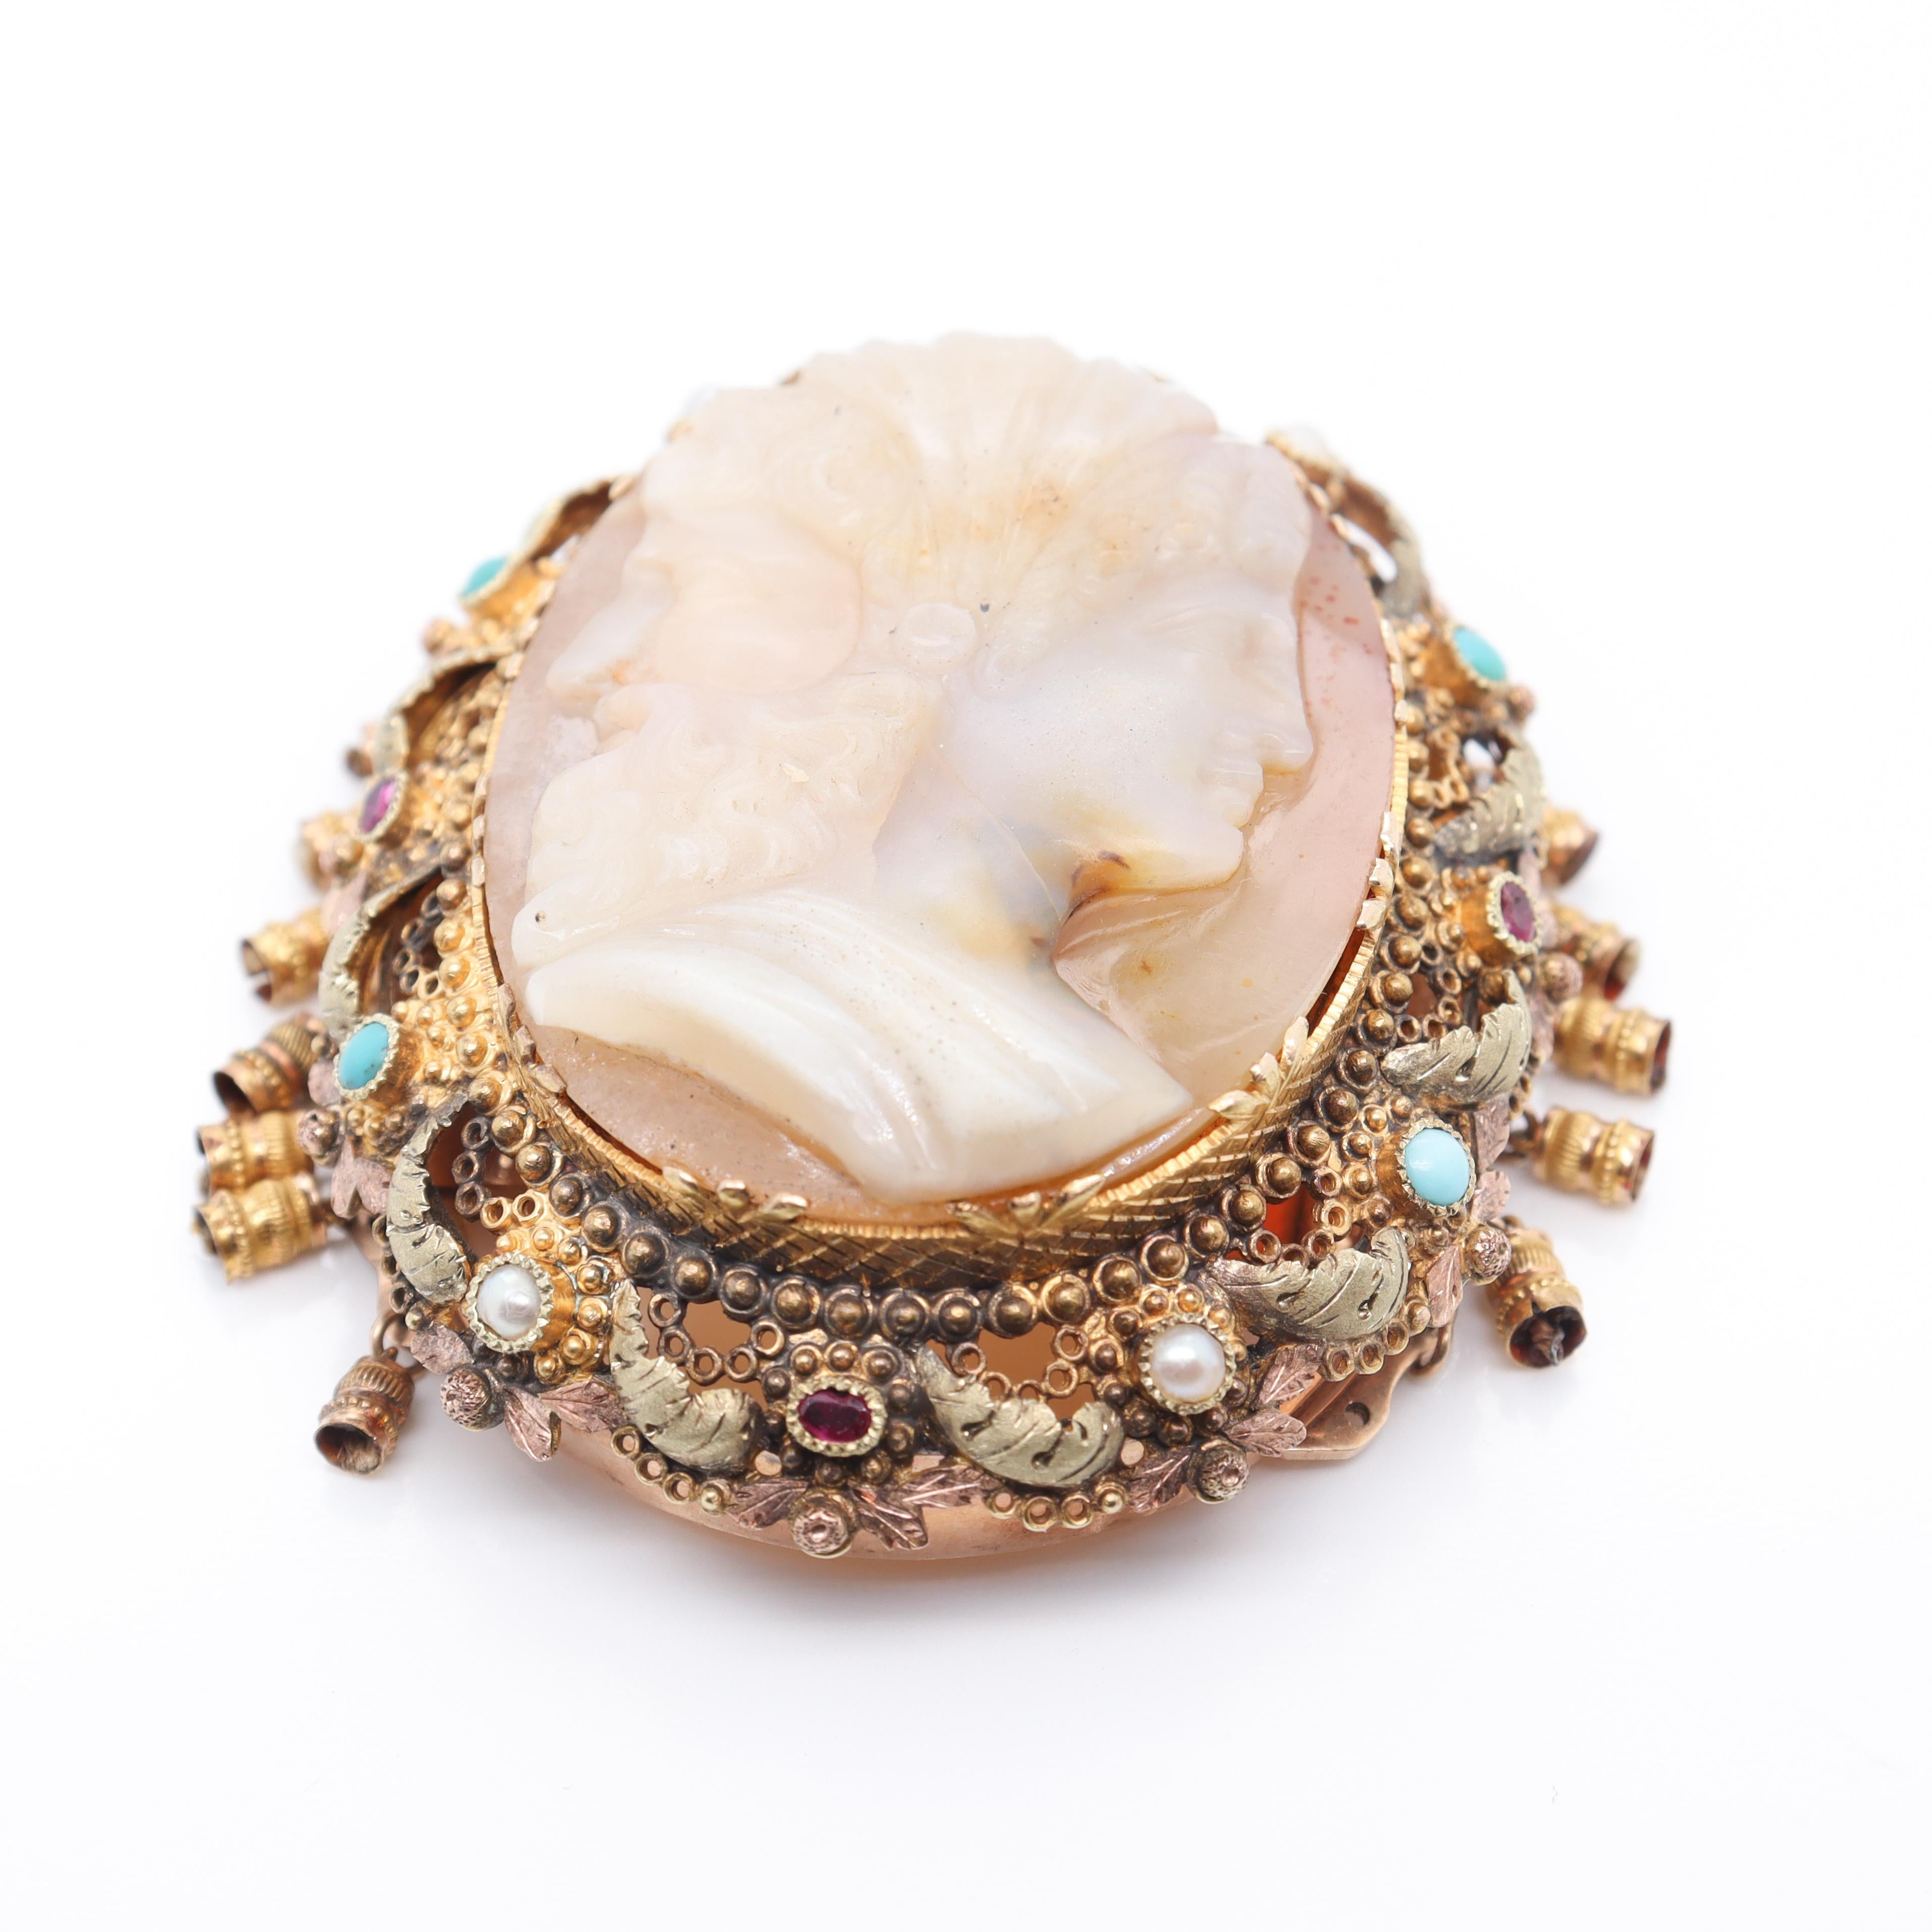 Cabochon Antique Gold & Carved Agate Cameo Hermaphrodite Bracelet or Necklace Clasp For Sale